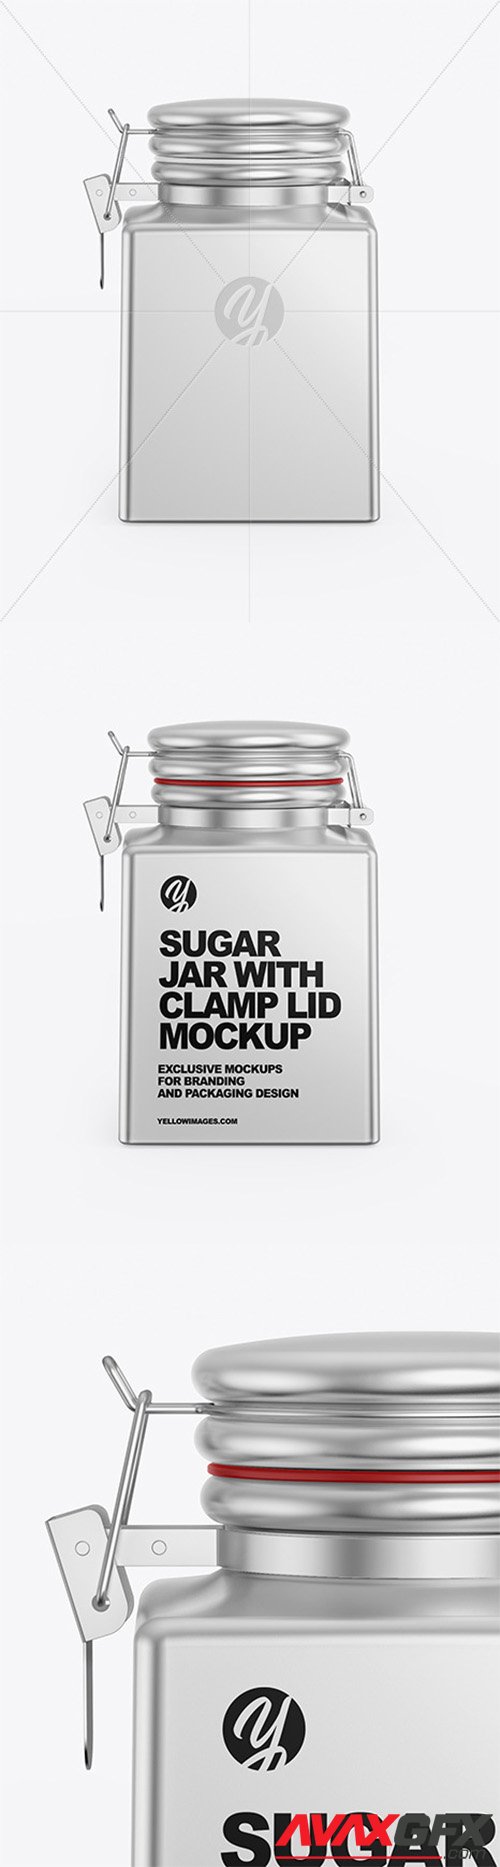 Metallic Sugar Jar Mockup 64990